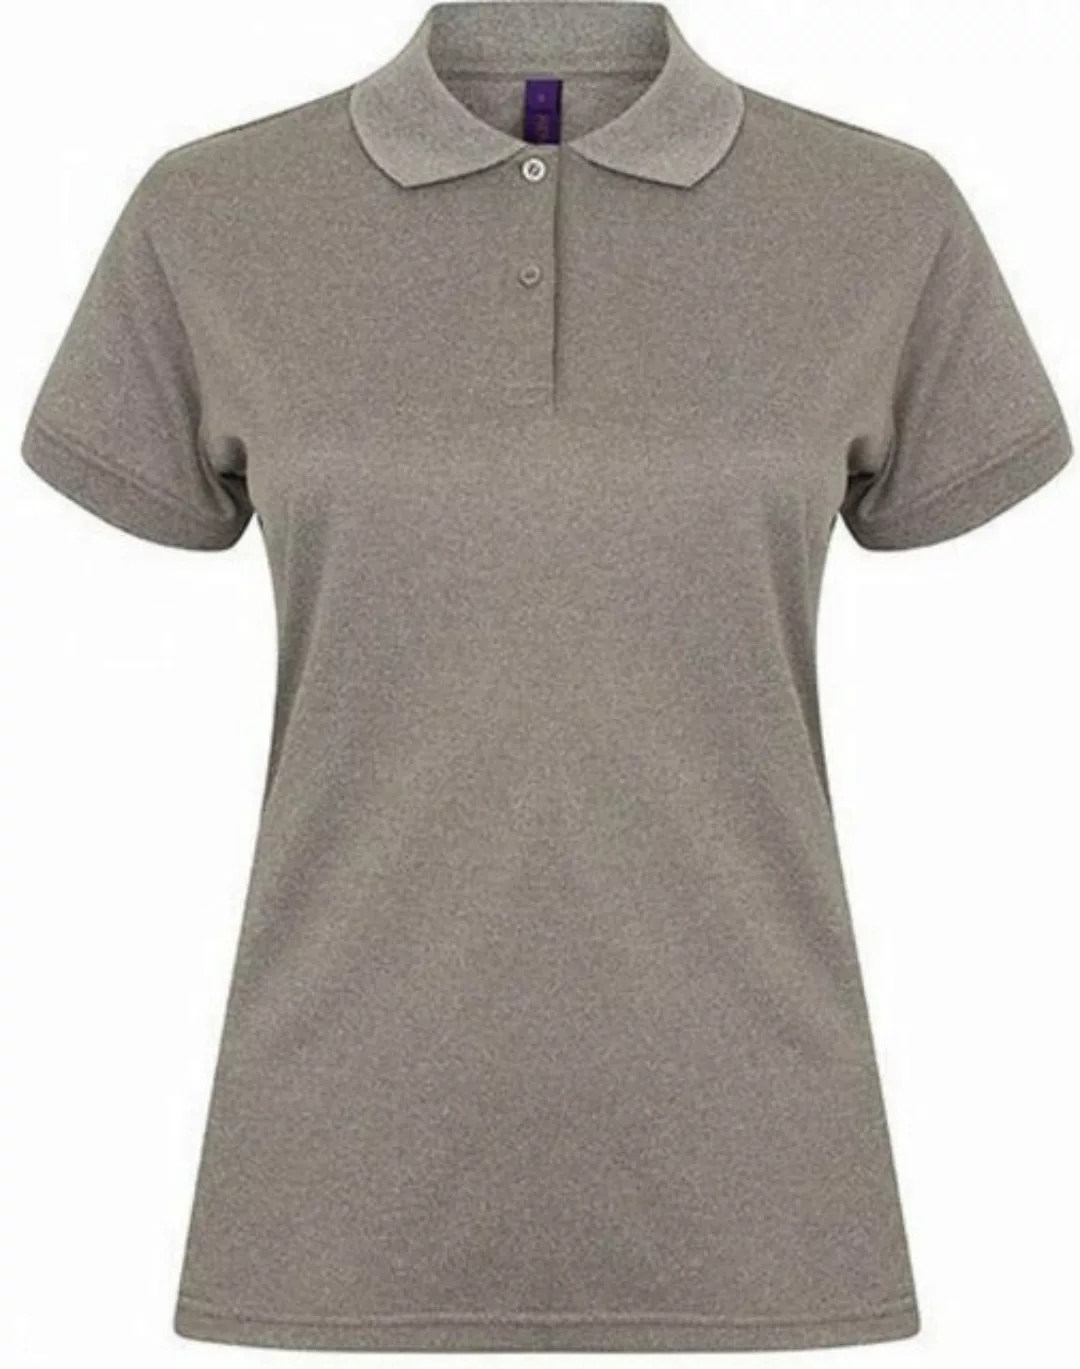 Henbury Poloshirt Damen Coolplus Wicking Polo Shirt / Mikro-Piqué günstig online kaufen